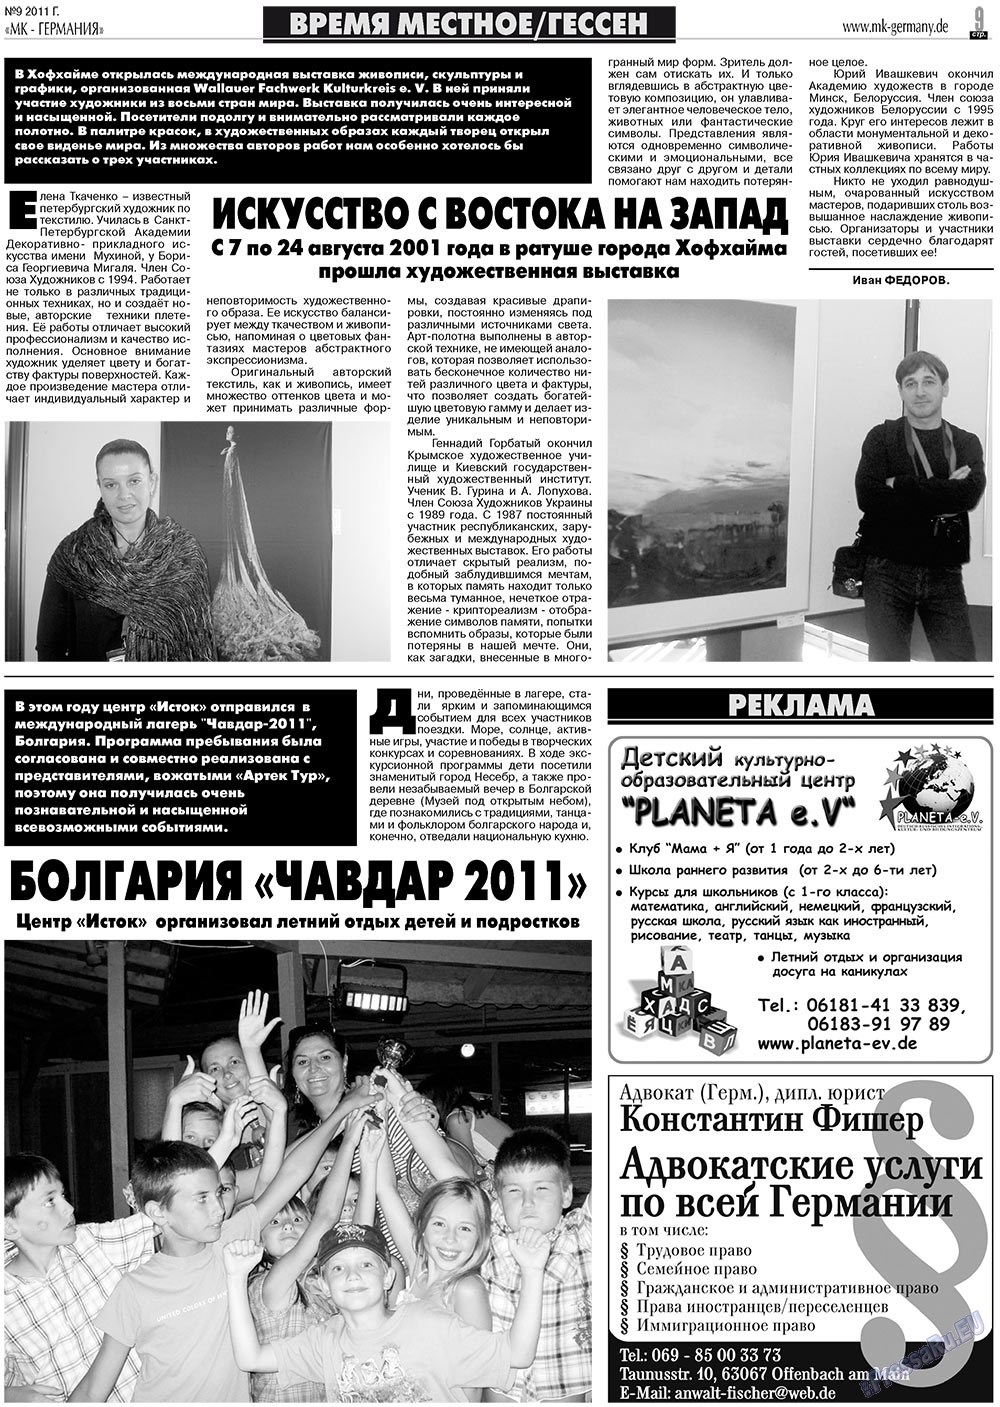 МК-Германия планета мнений, газета. 2011 №9 стр.9